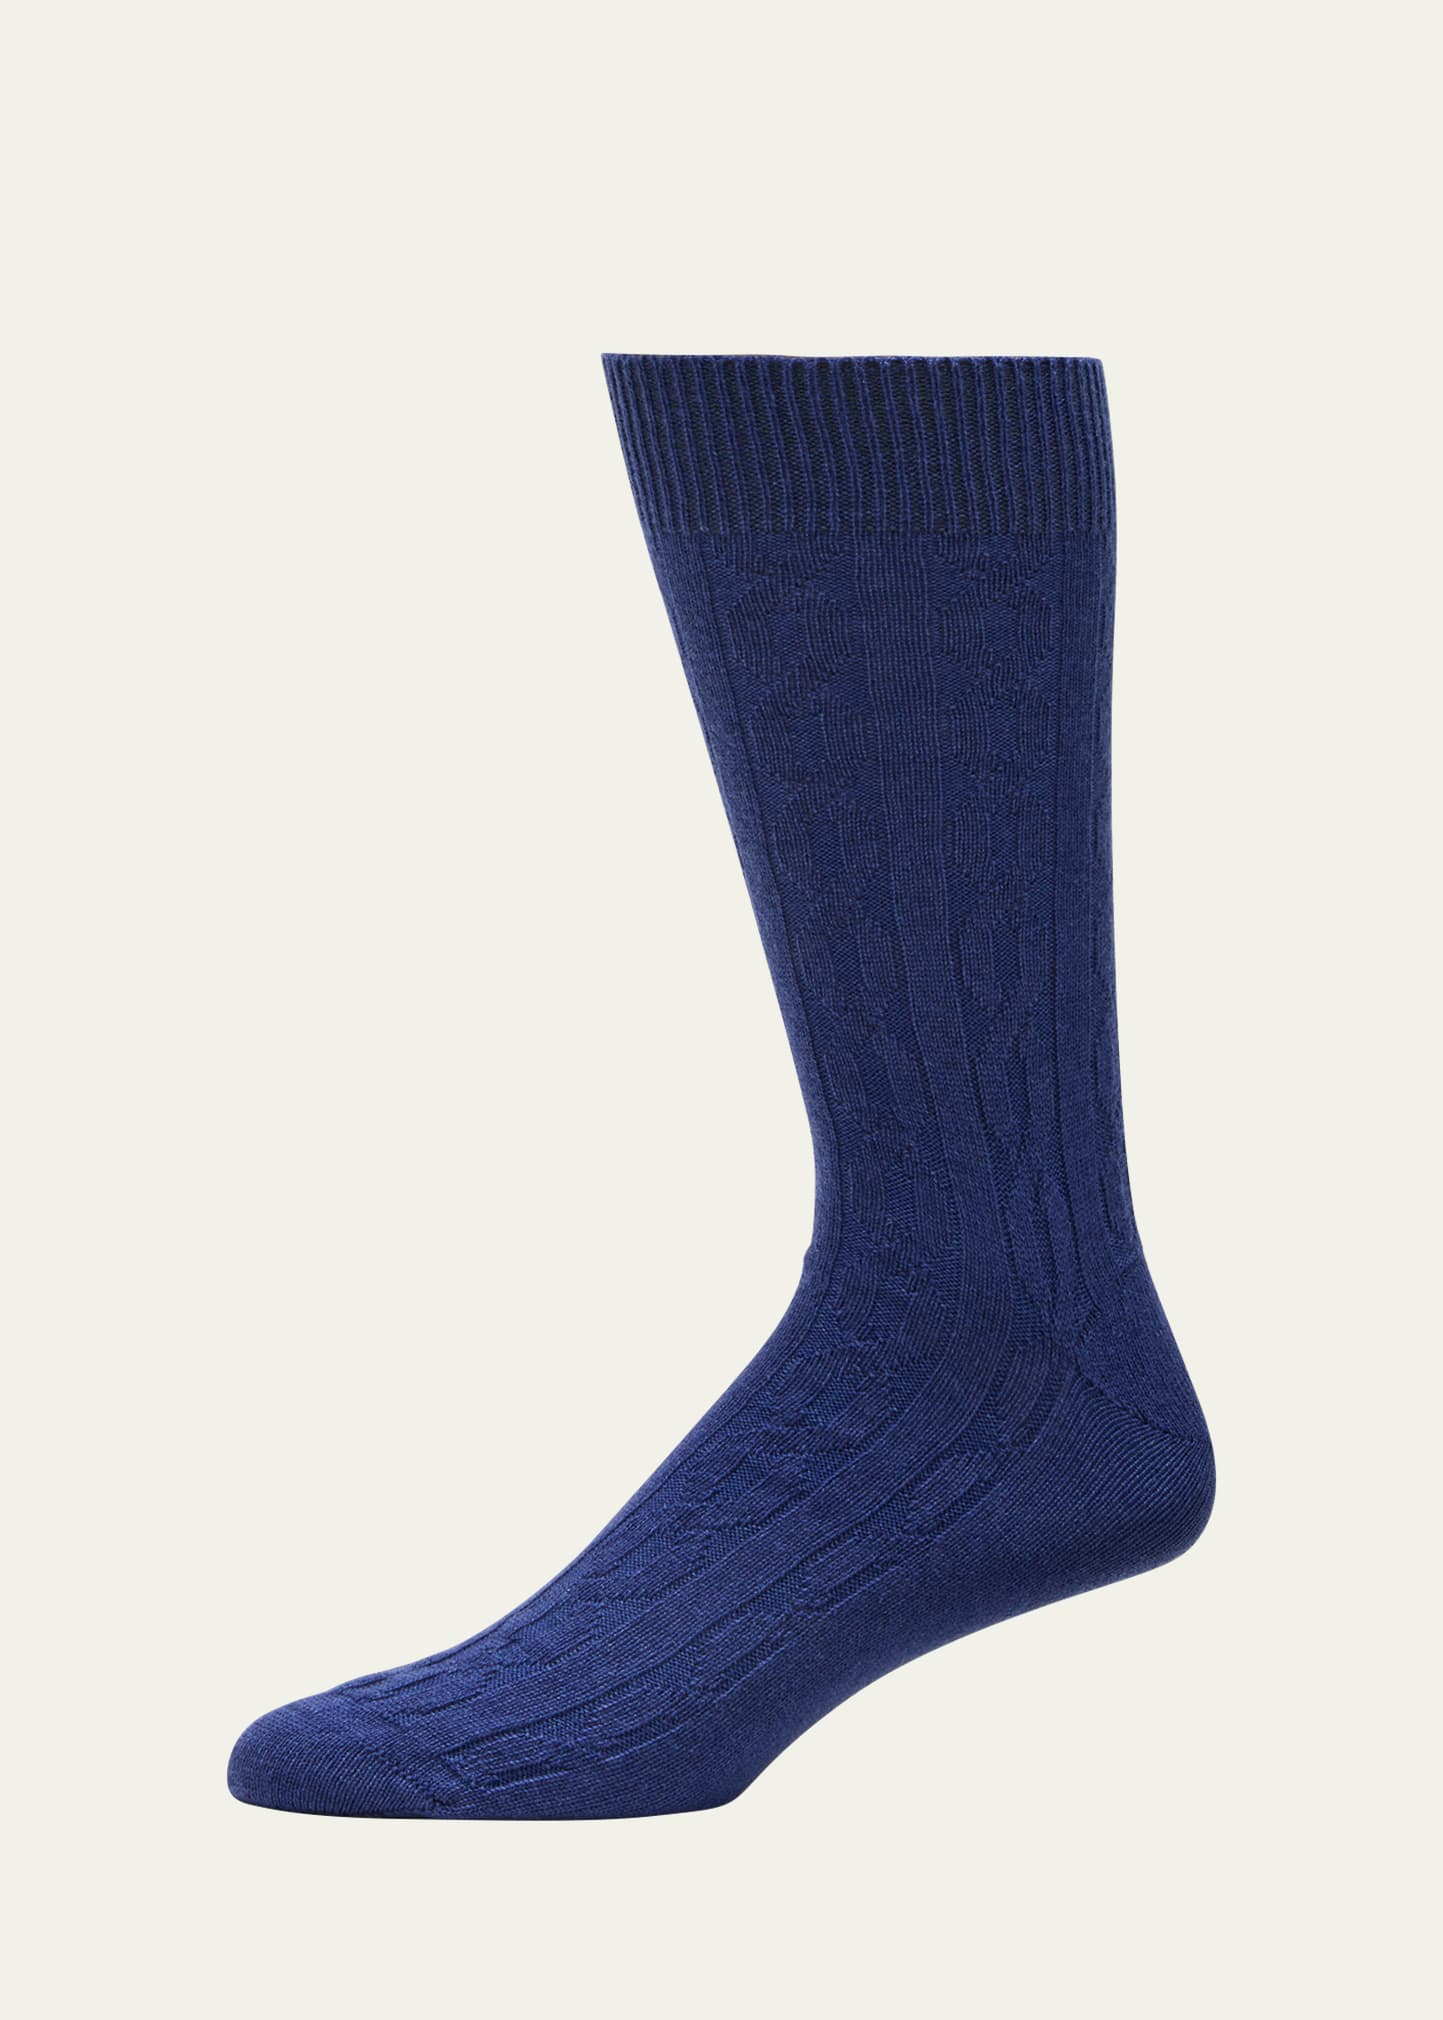 Men's Cashmere Cable Knit Mid-Calf Socks